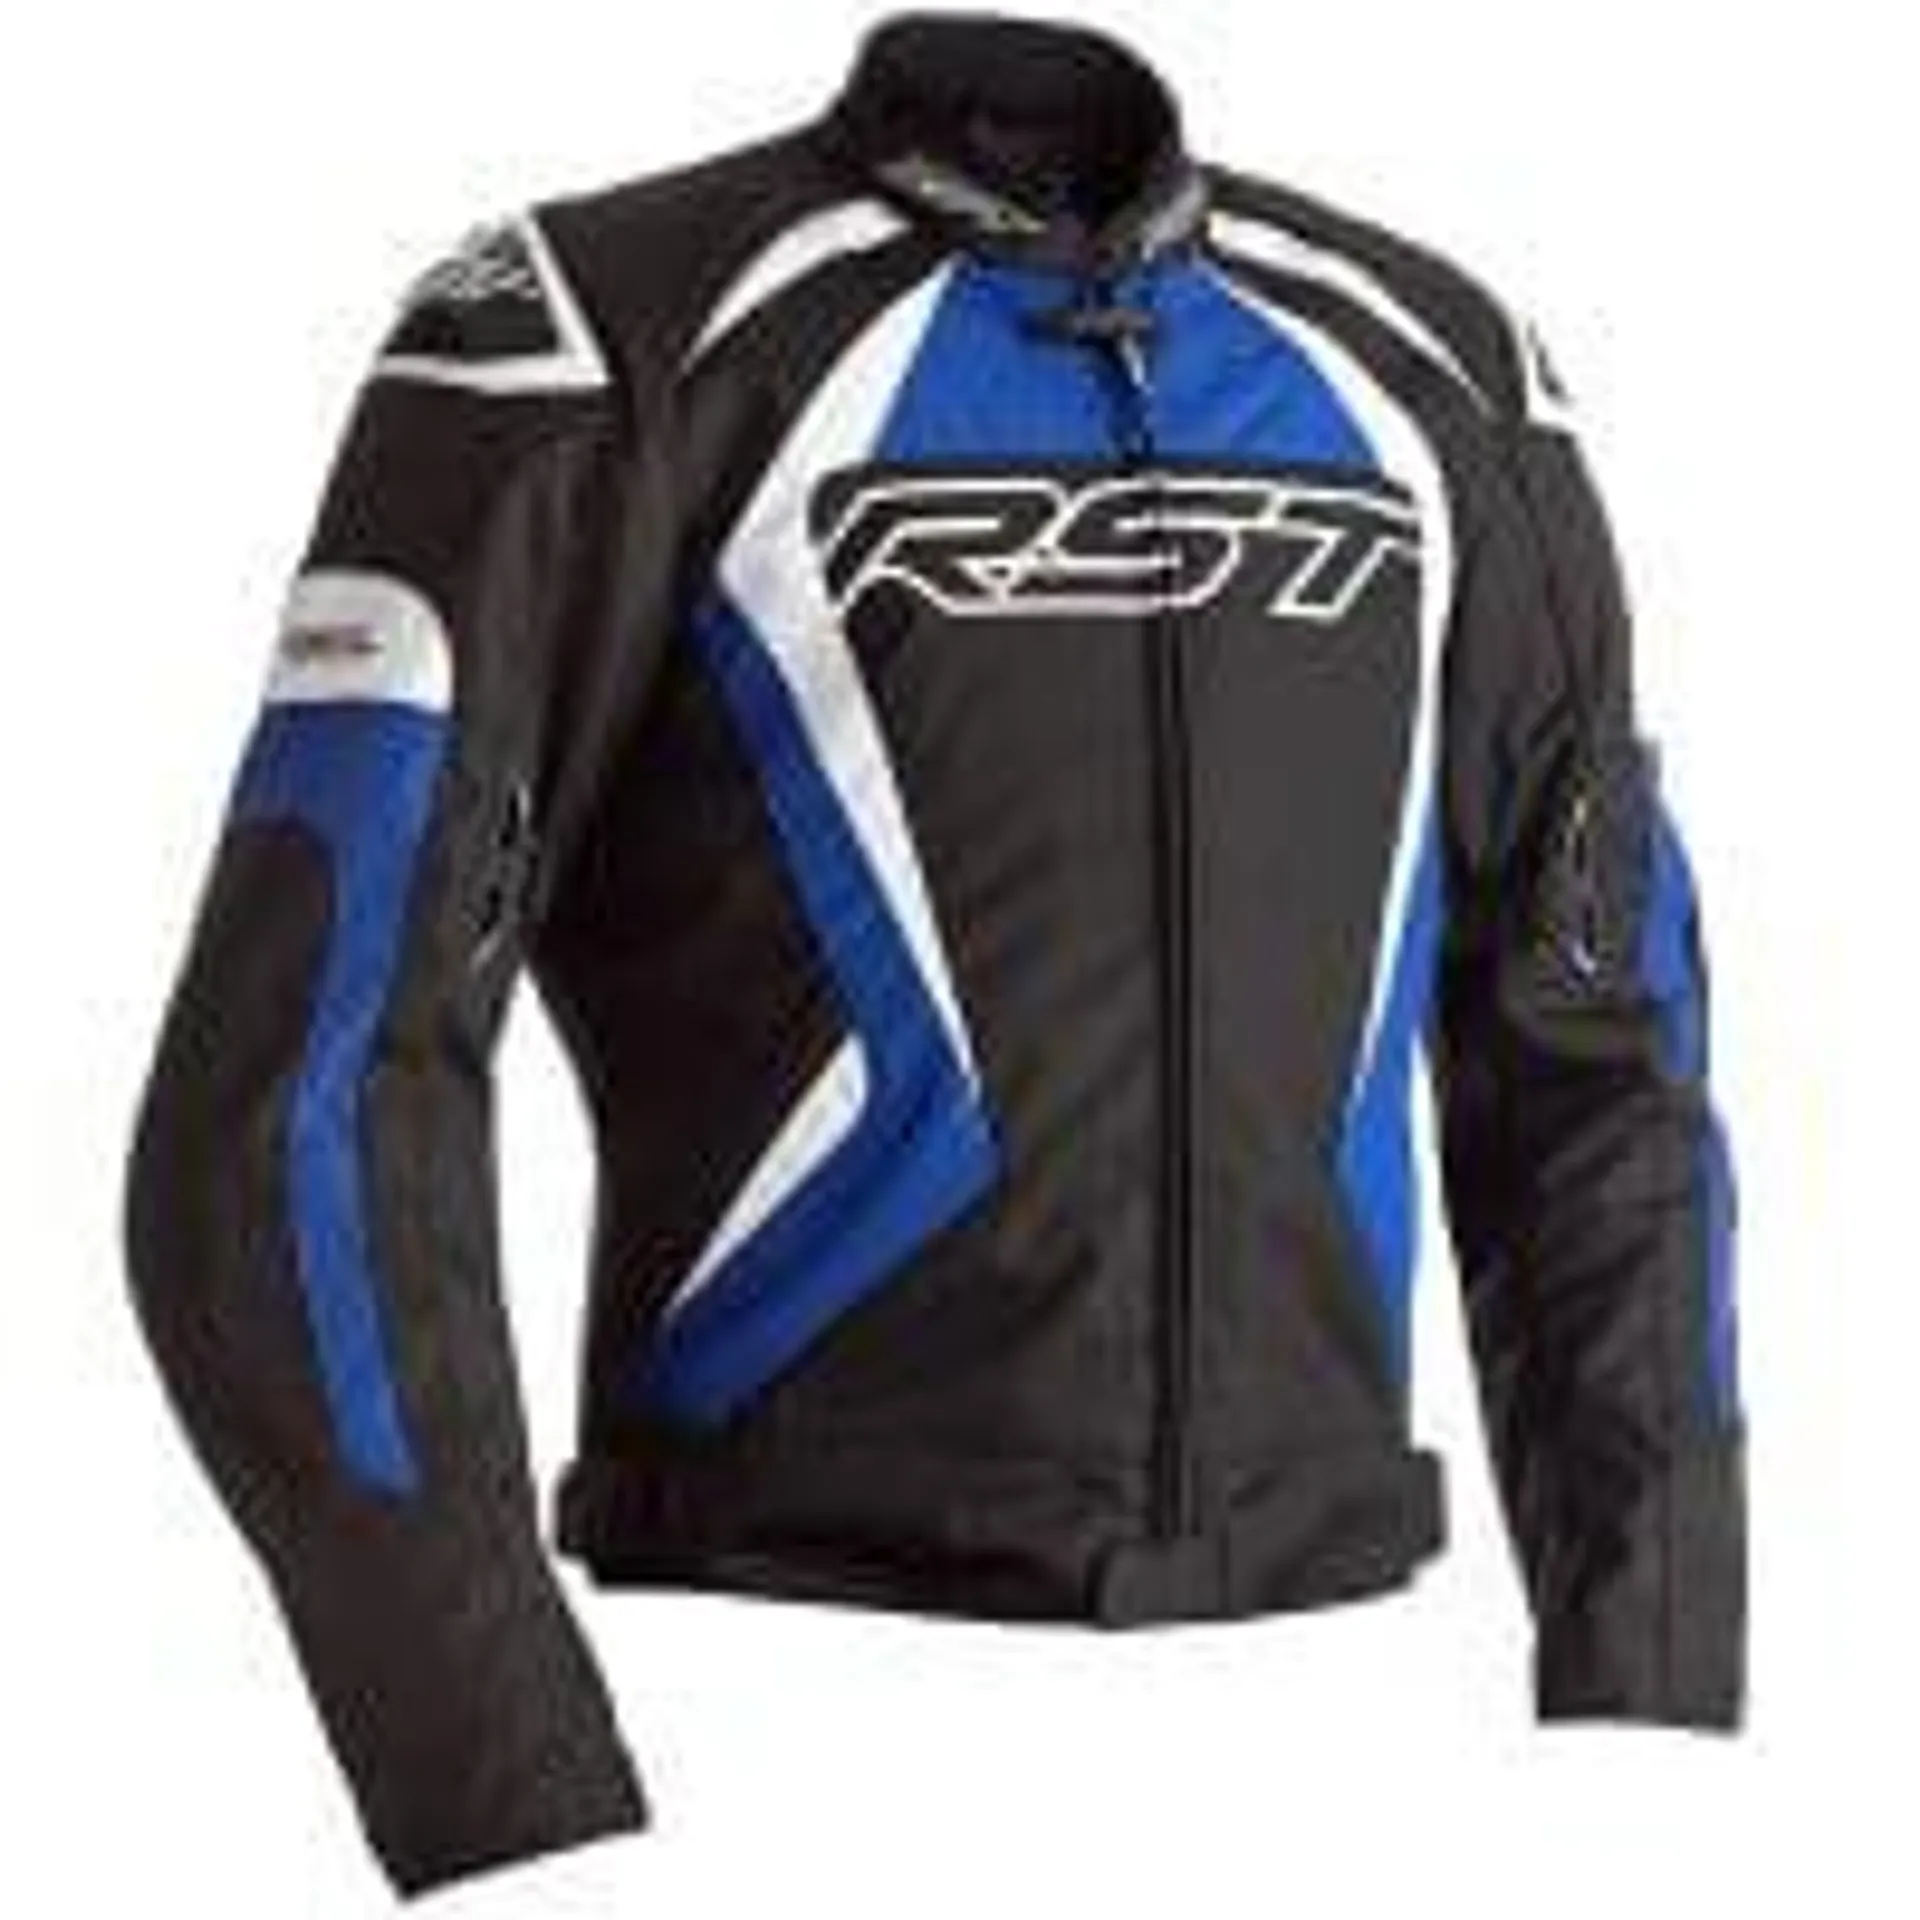 RST Tractech Evo 4 CE Textile Jacket - Black / Blue / White